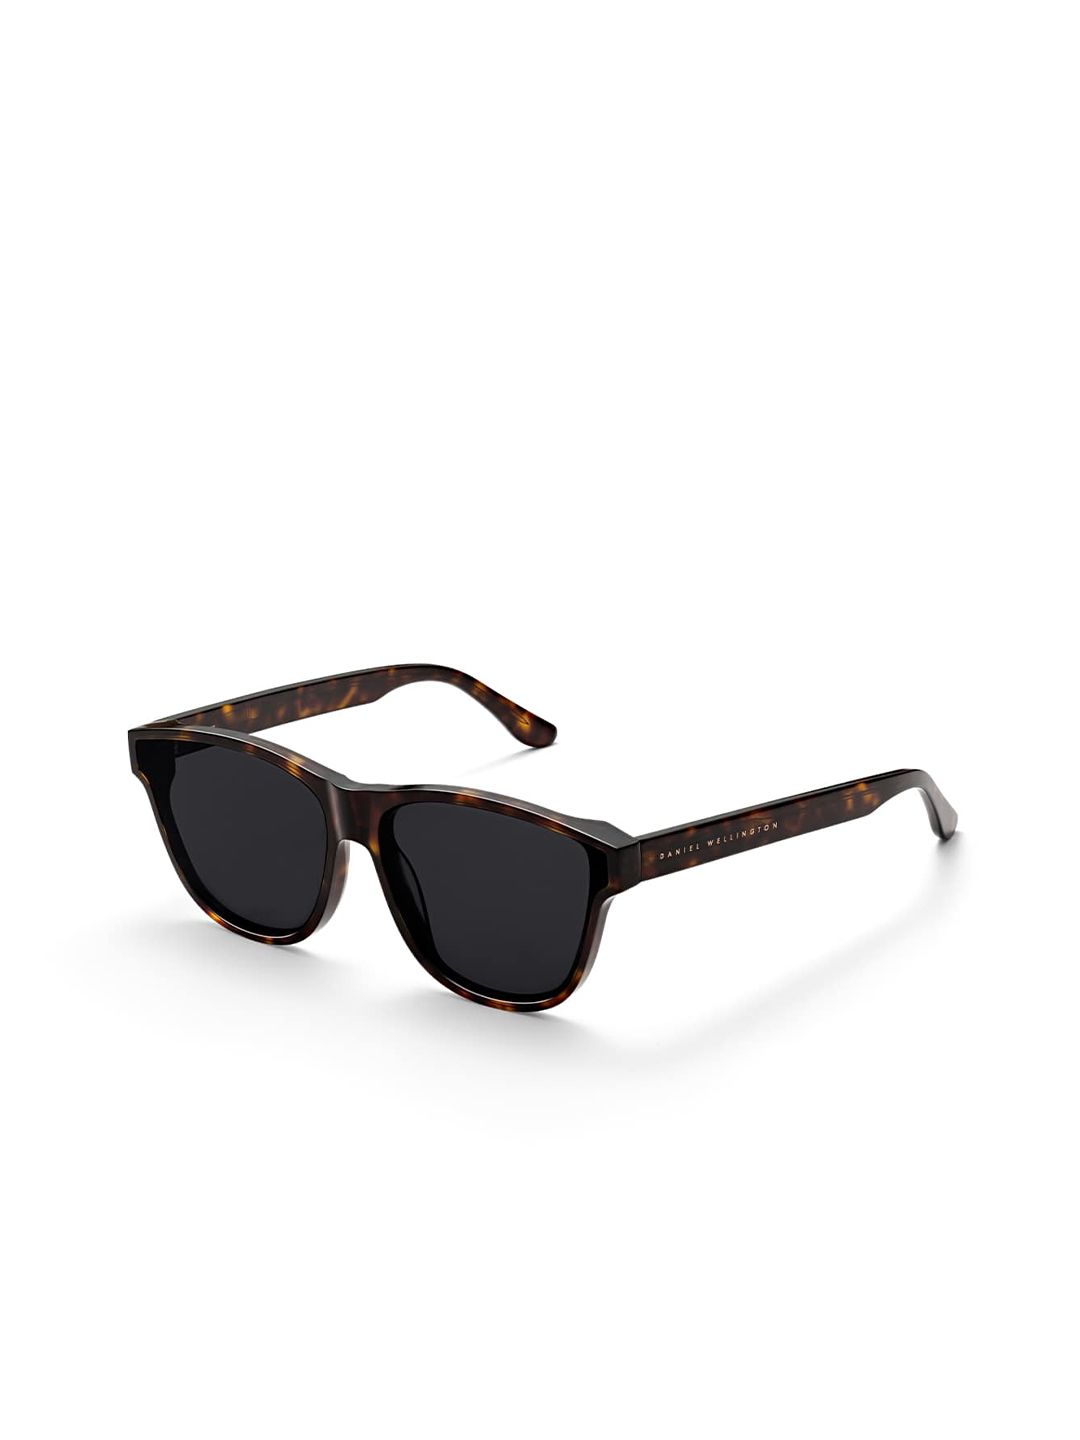 Daniel Wellington Unisex Black Lens & Brown Wayfarer Sunglasses with UV Protected Lens Price in India